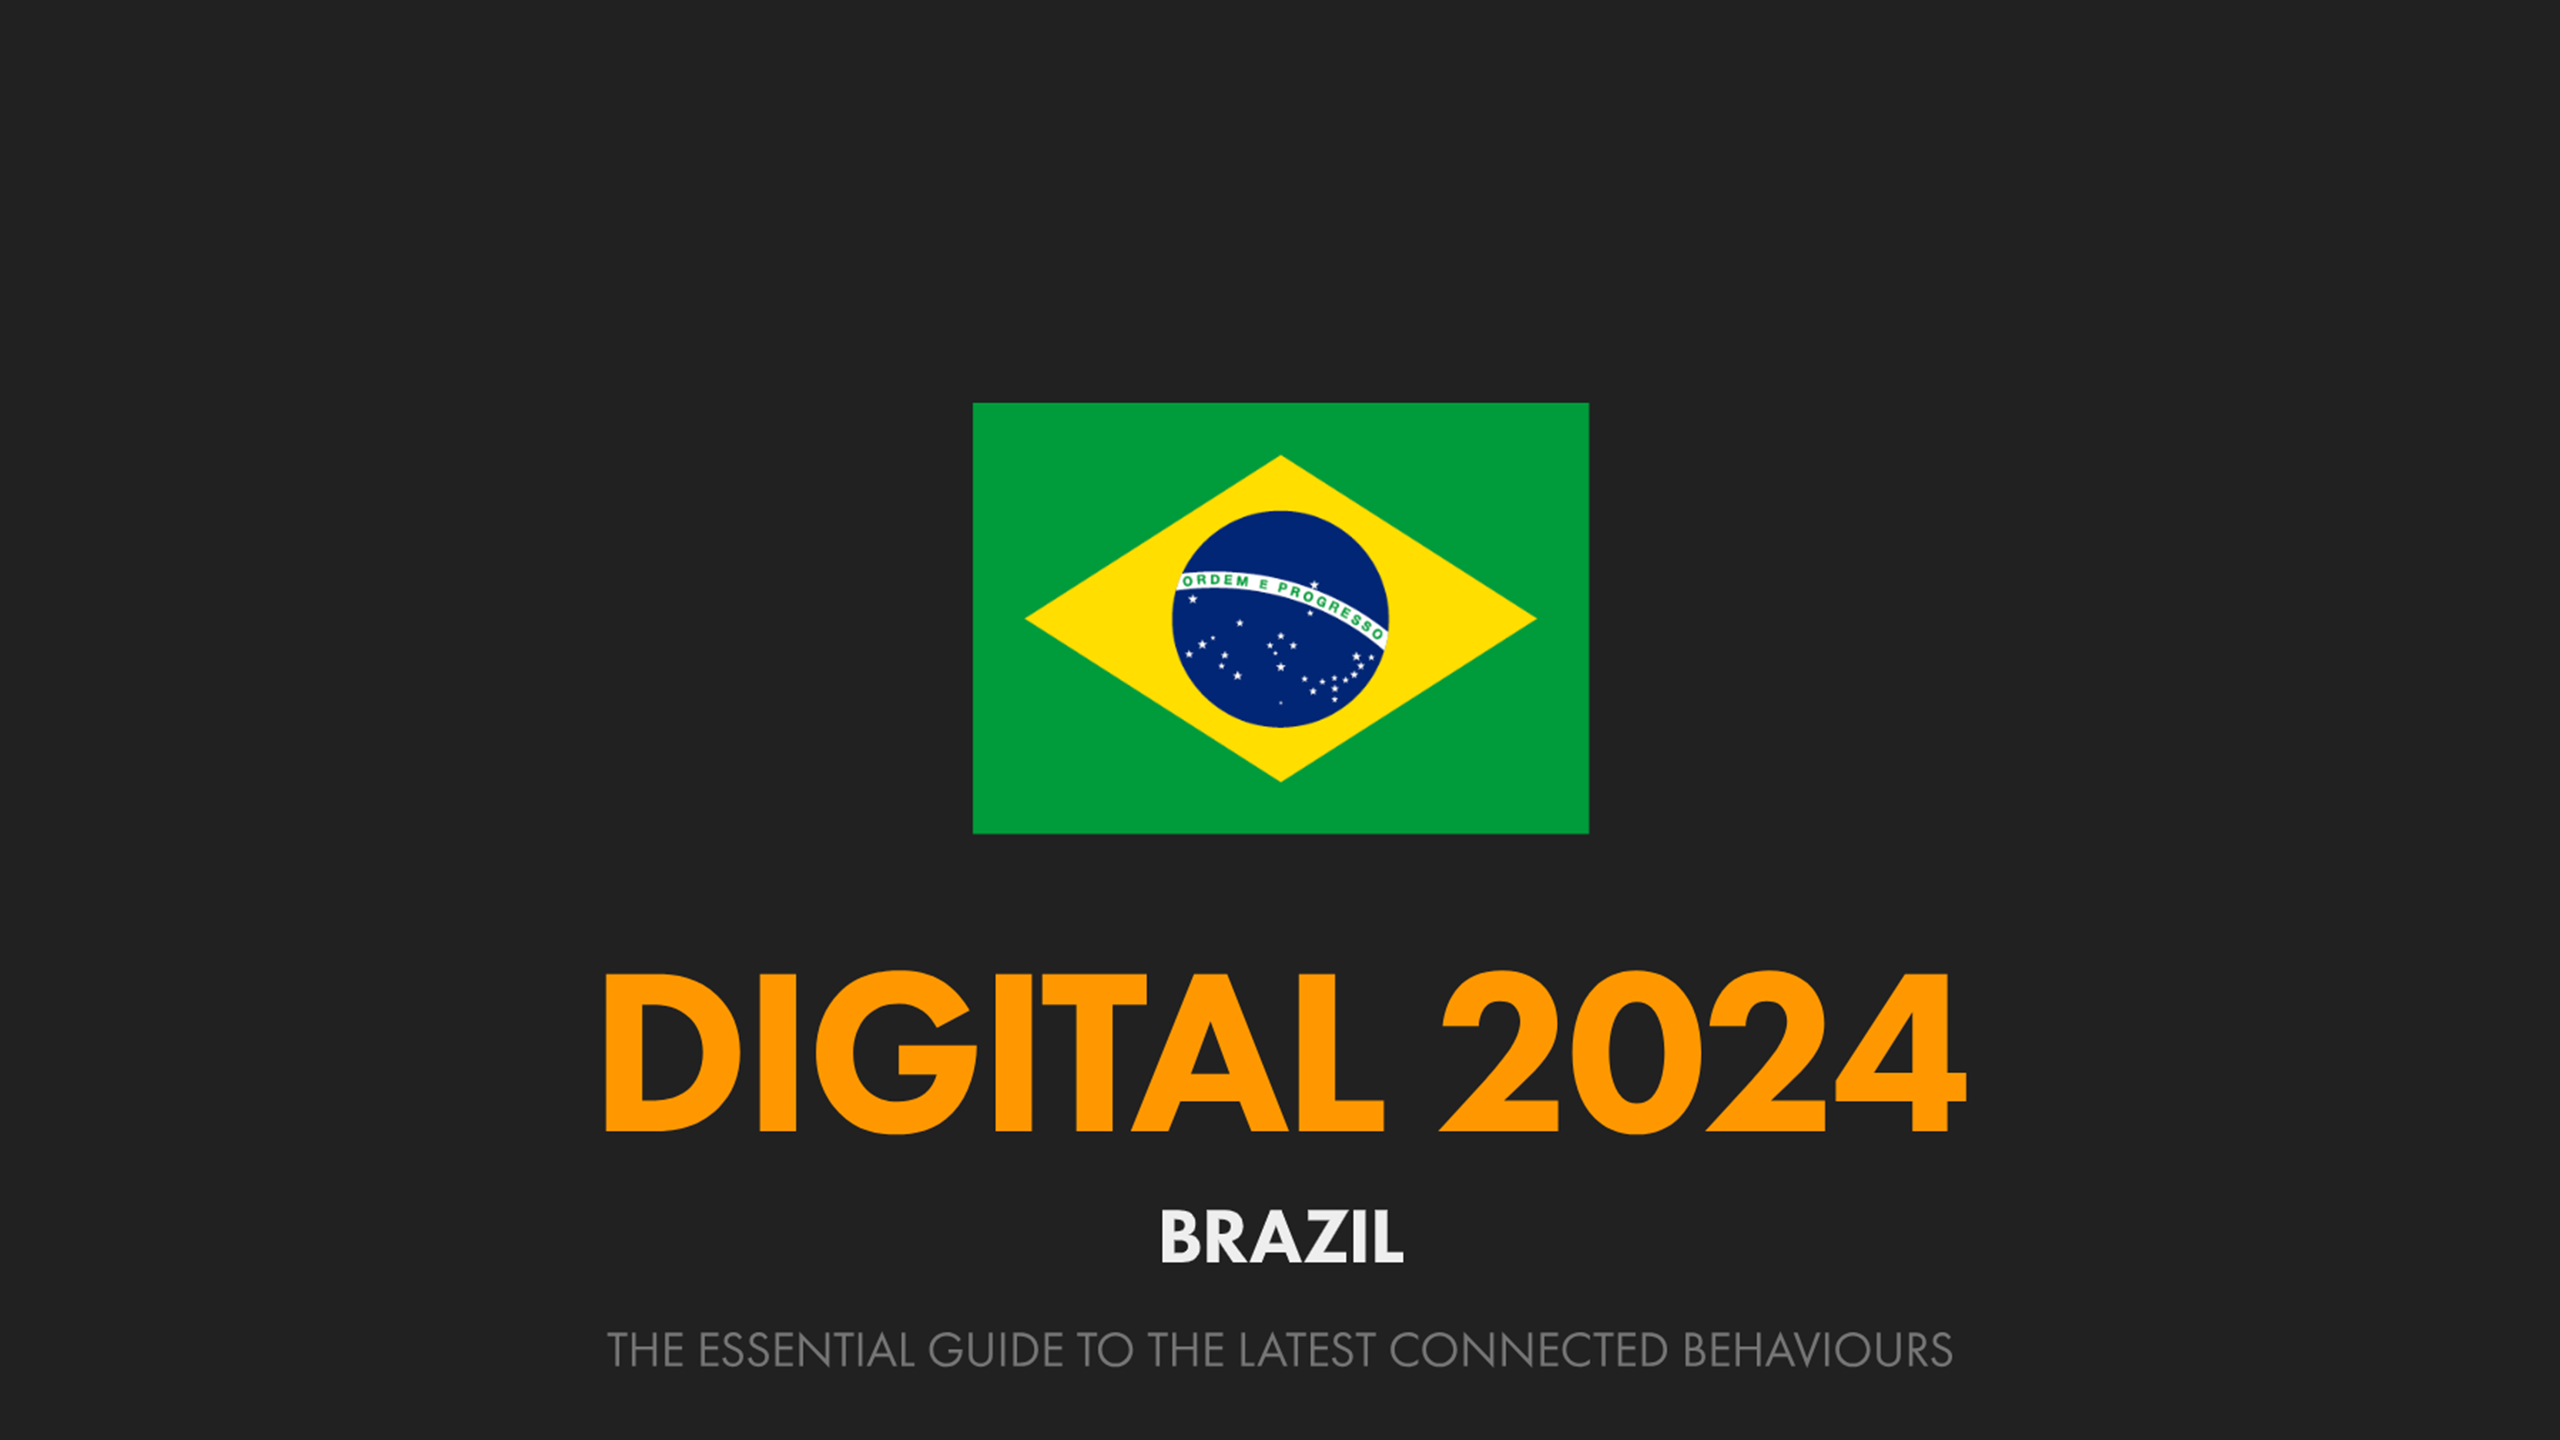 Digital Brazil 2024